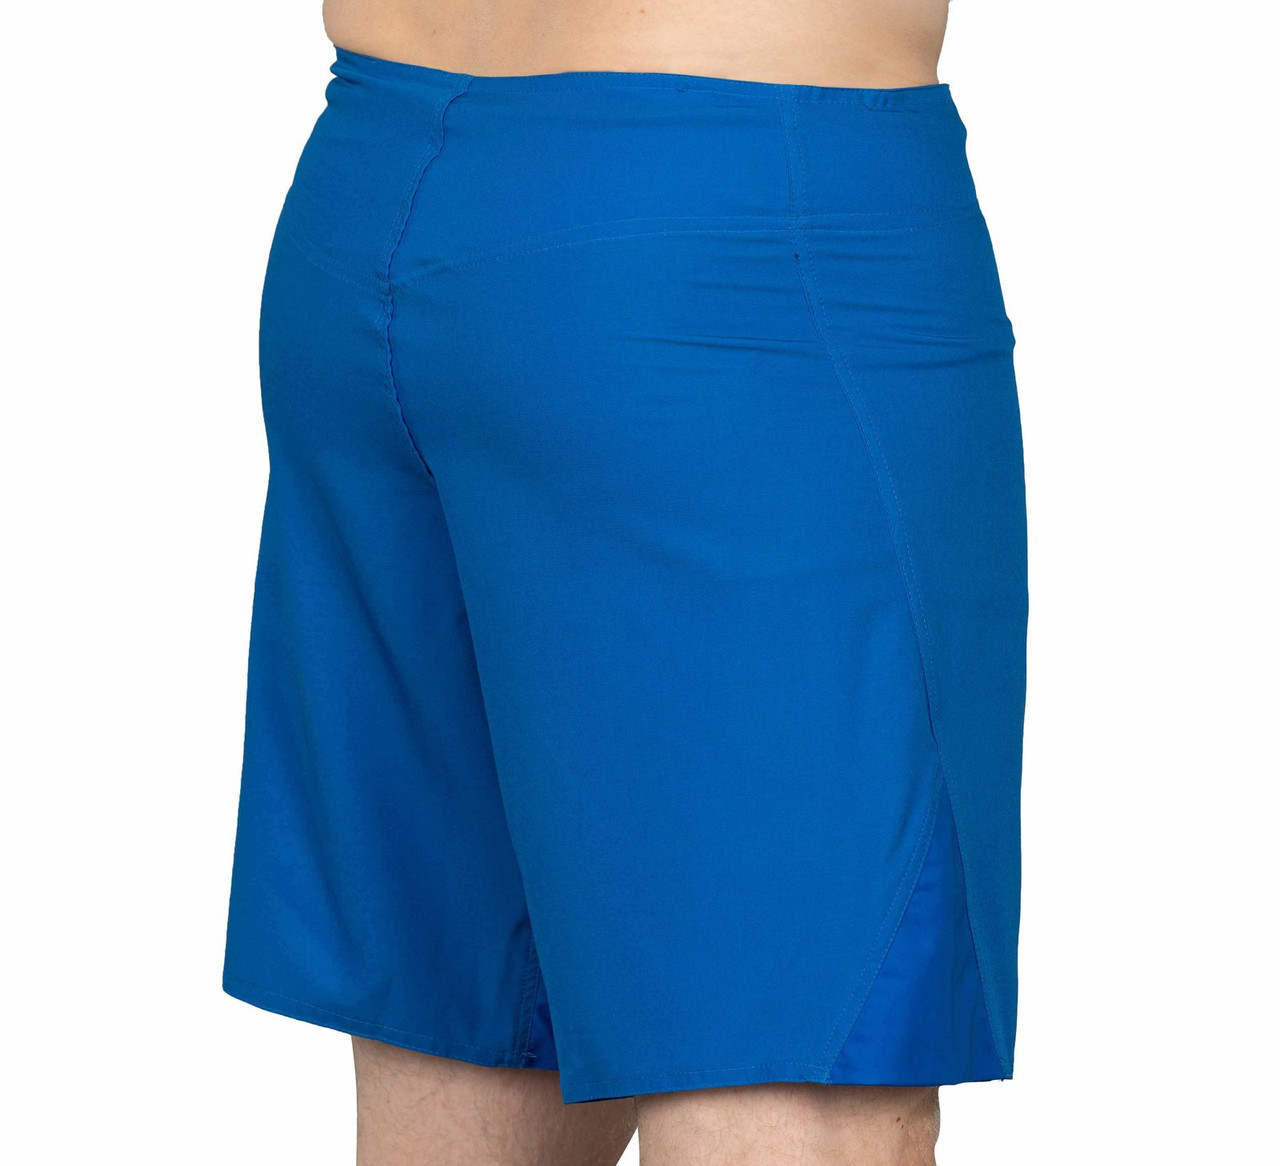 Baseline Women's Grappling Shorts